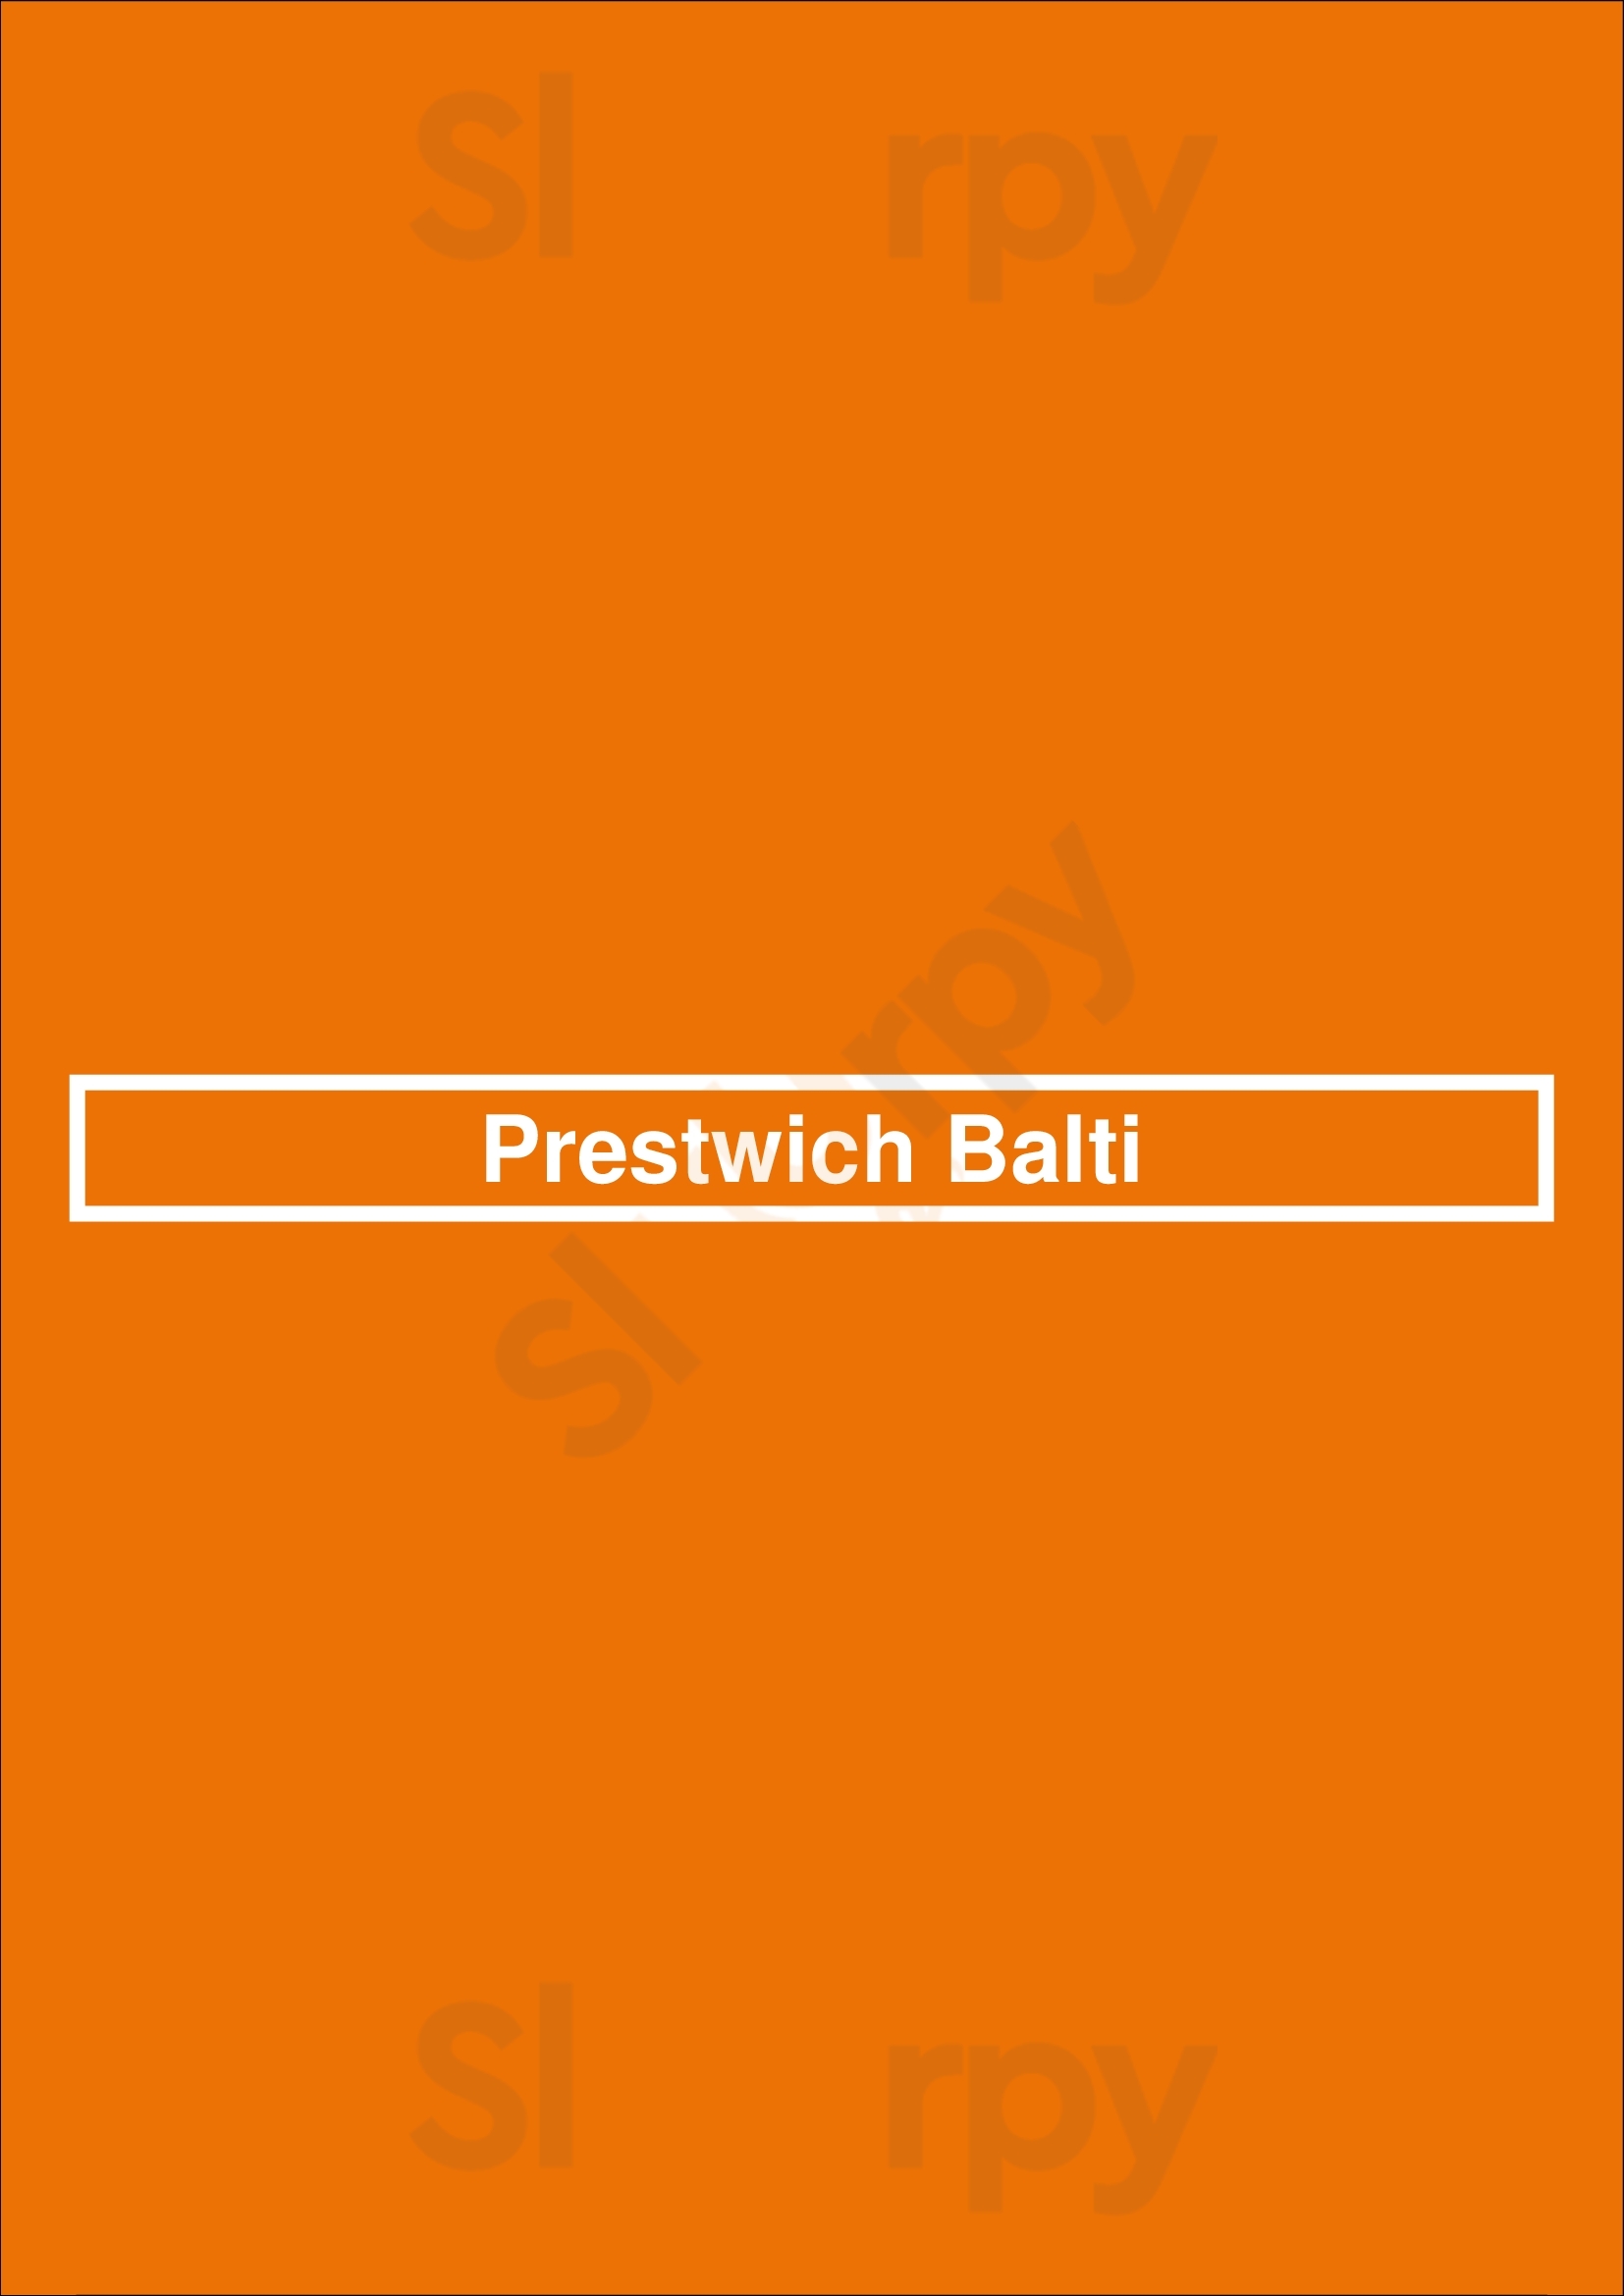 Prestwich Balti Prestwich Menu - 1